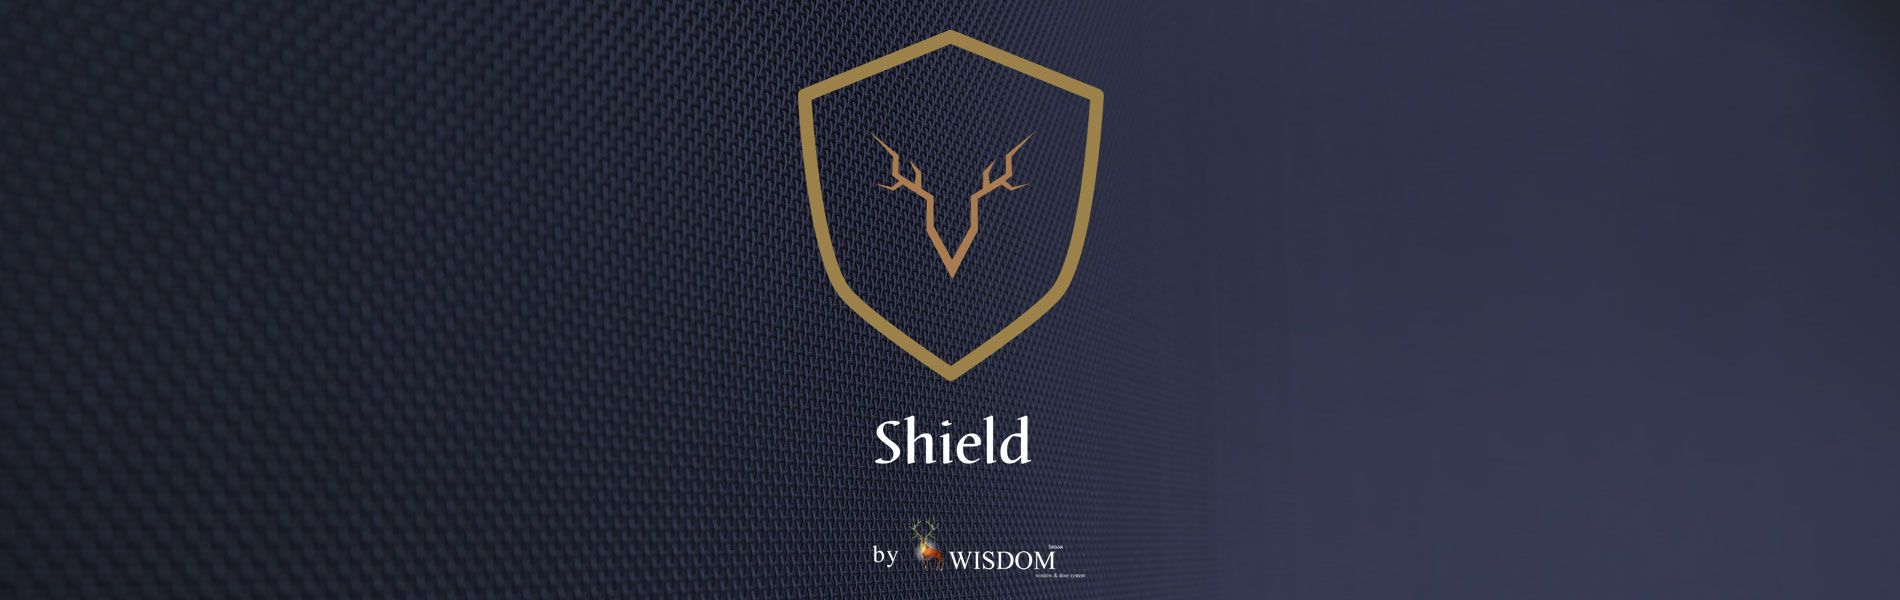 Shields Series